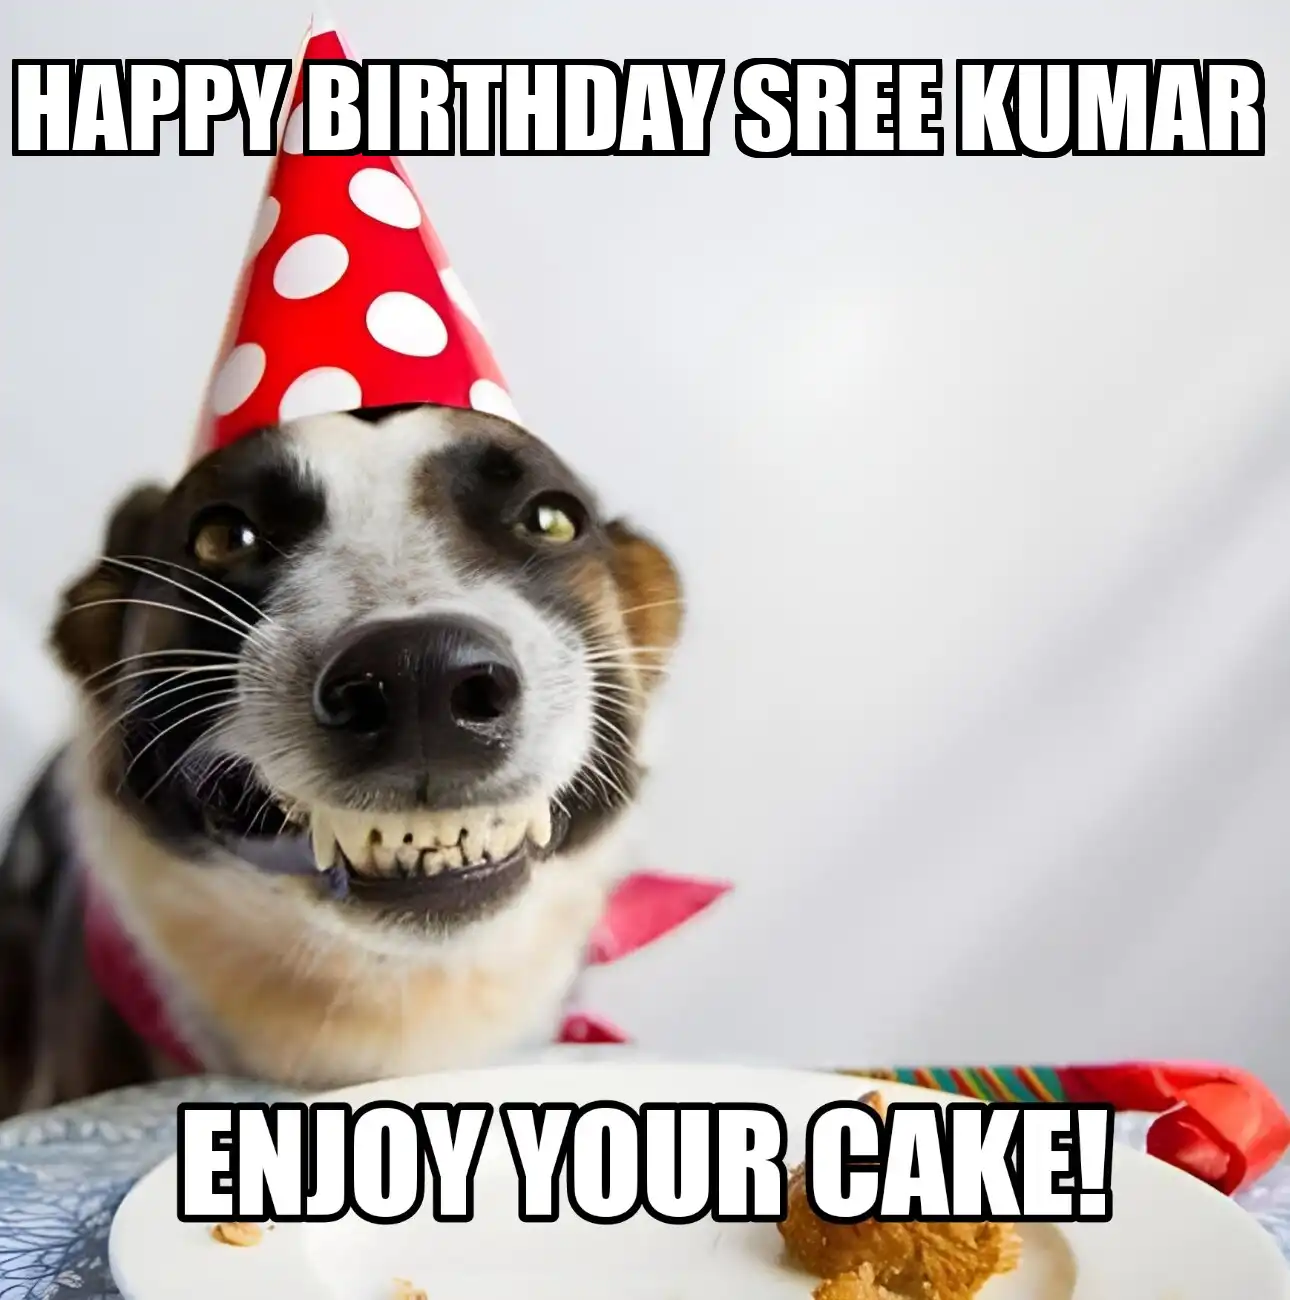 Happy Birthday Sree Kumar Enjoy Your Cake Dog Meme